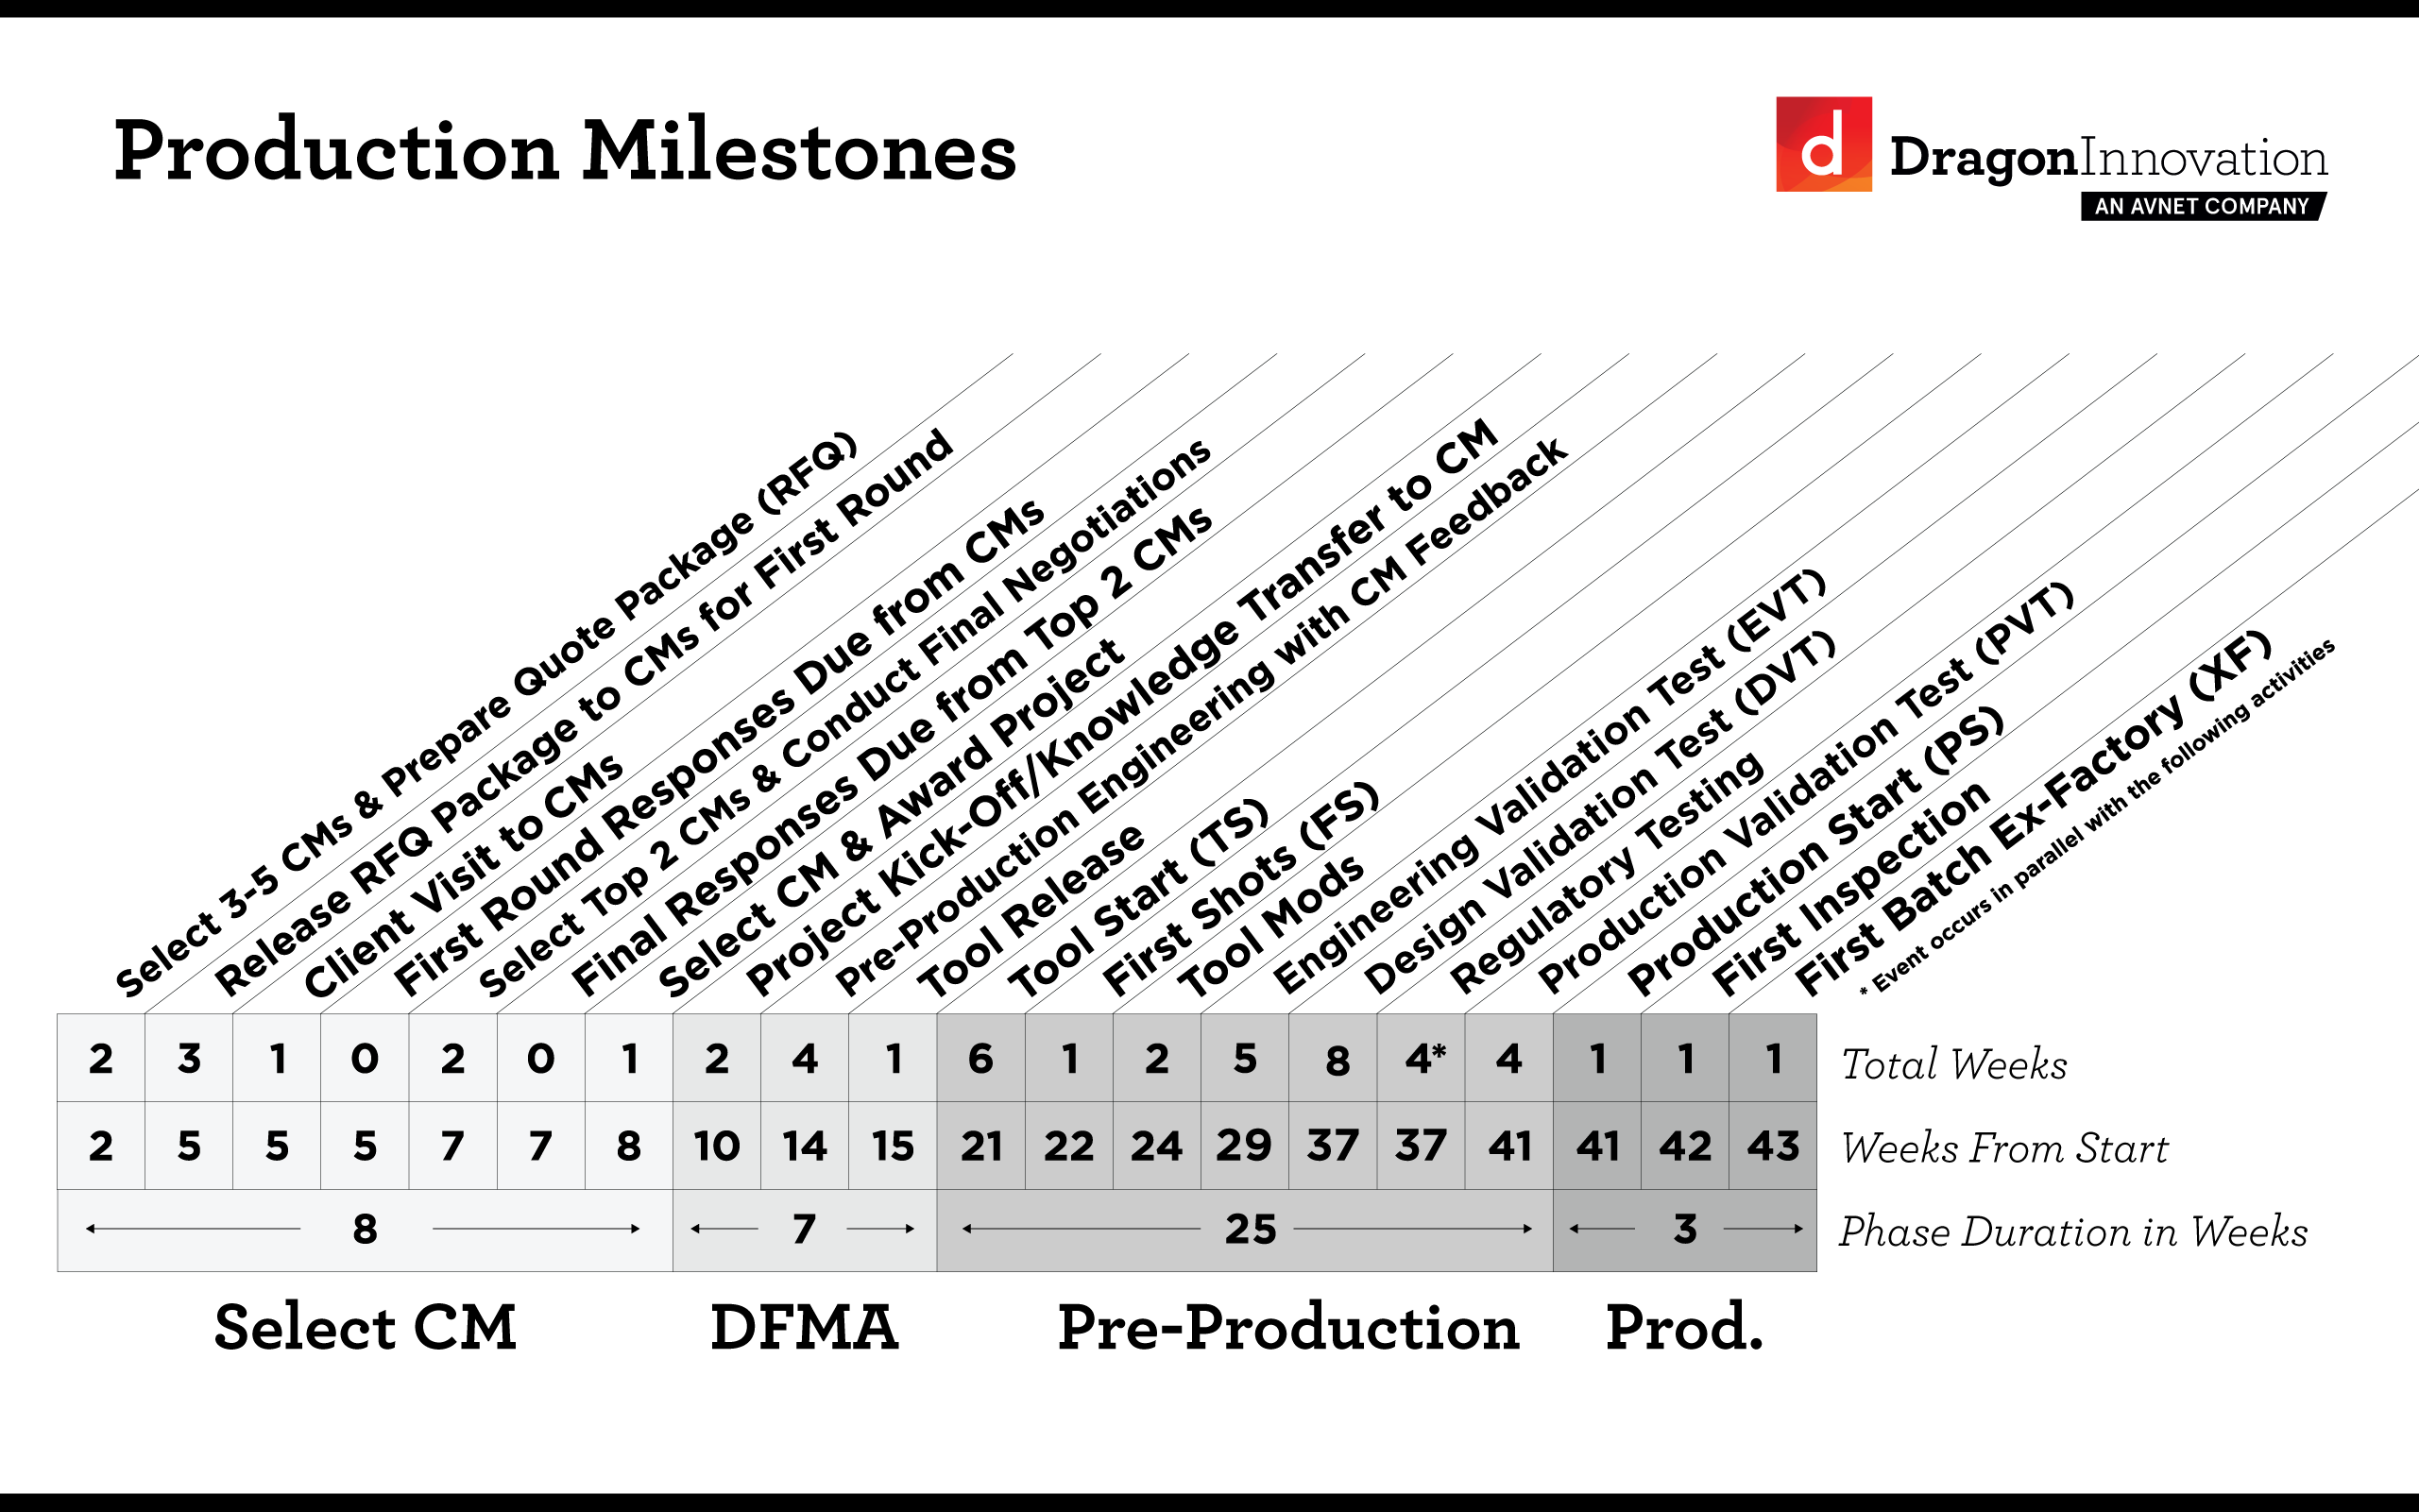 Dragon Innovation: Production Milestones timeline: EVT, DVT, PVT